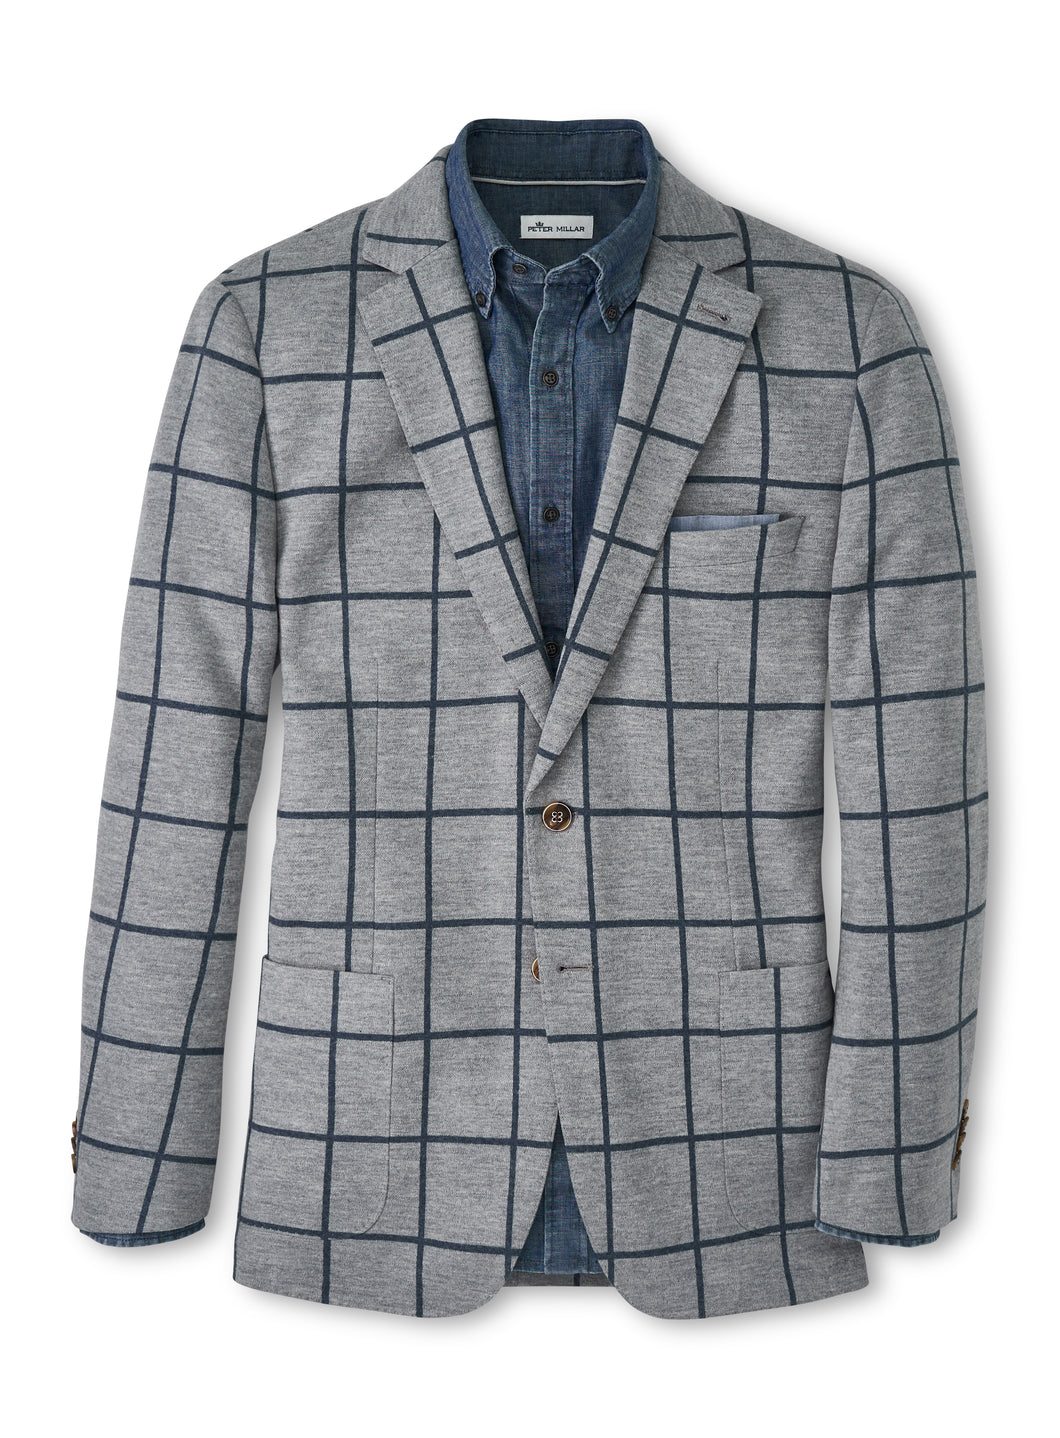 Peter Millar Sherwood Windowpane Soft Jacket in British Grey